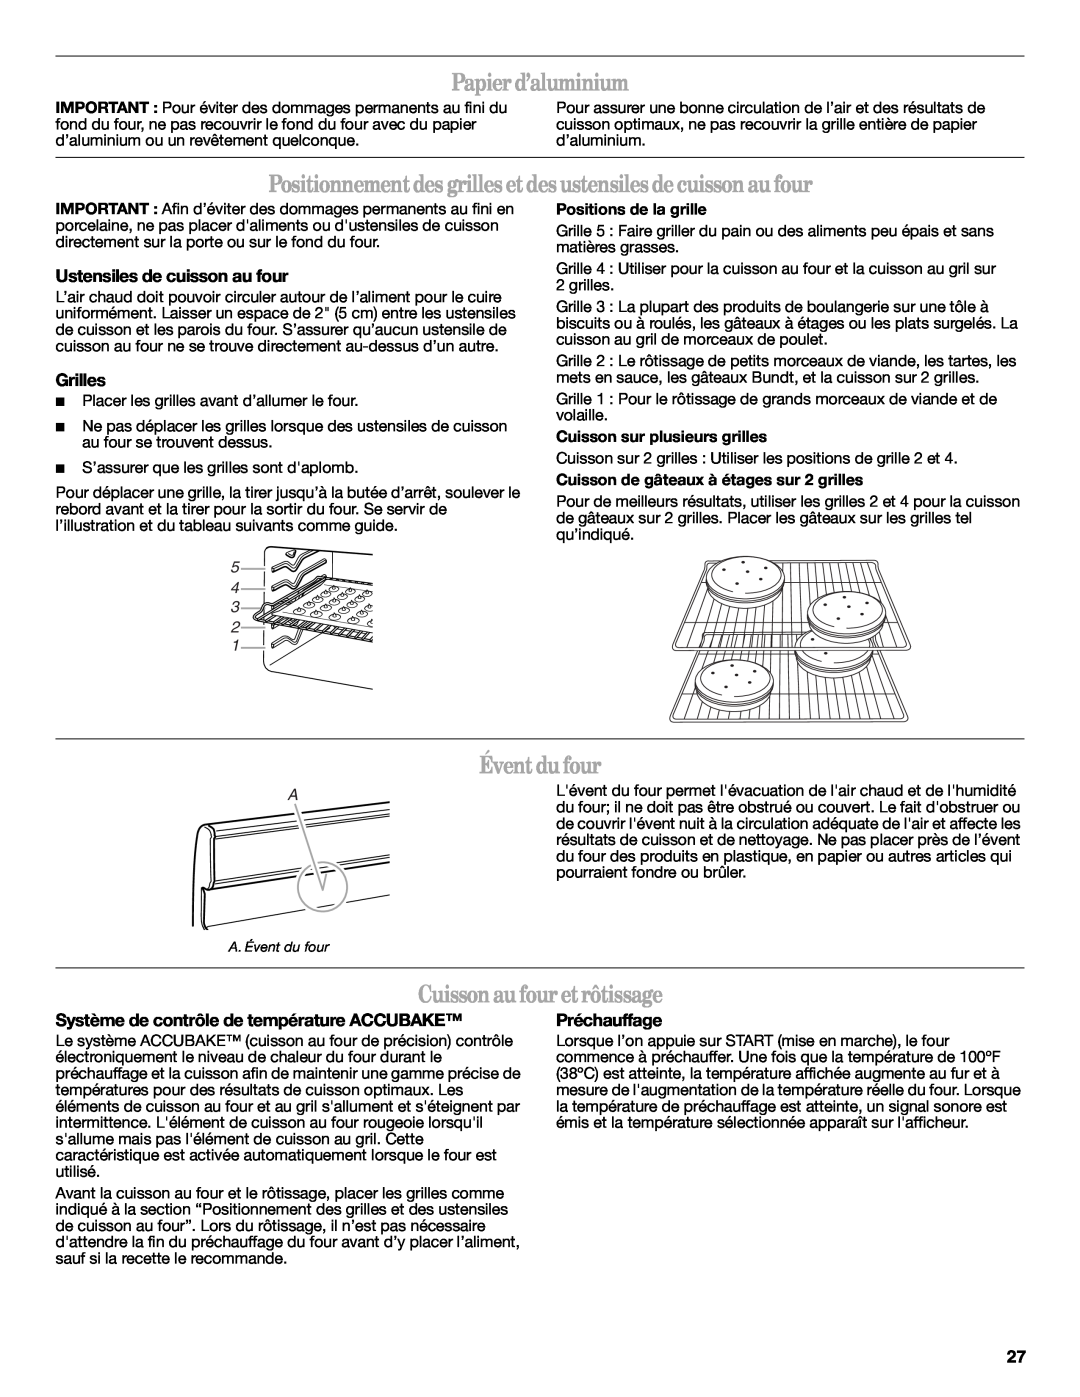 Whirlpool W10394385A Papierd’aluminium, Positionnementdes grilles etdesustensiles decuisson aufour, Éventdufour, Grilles 